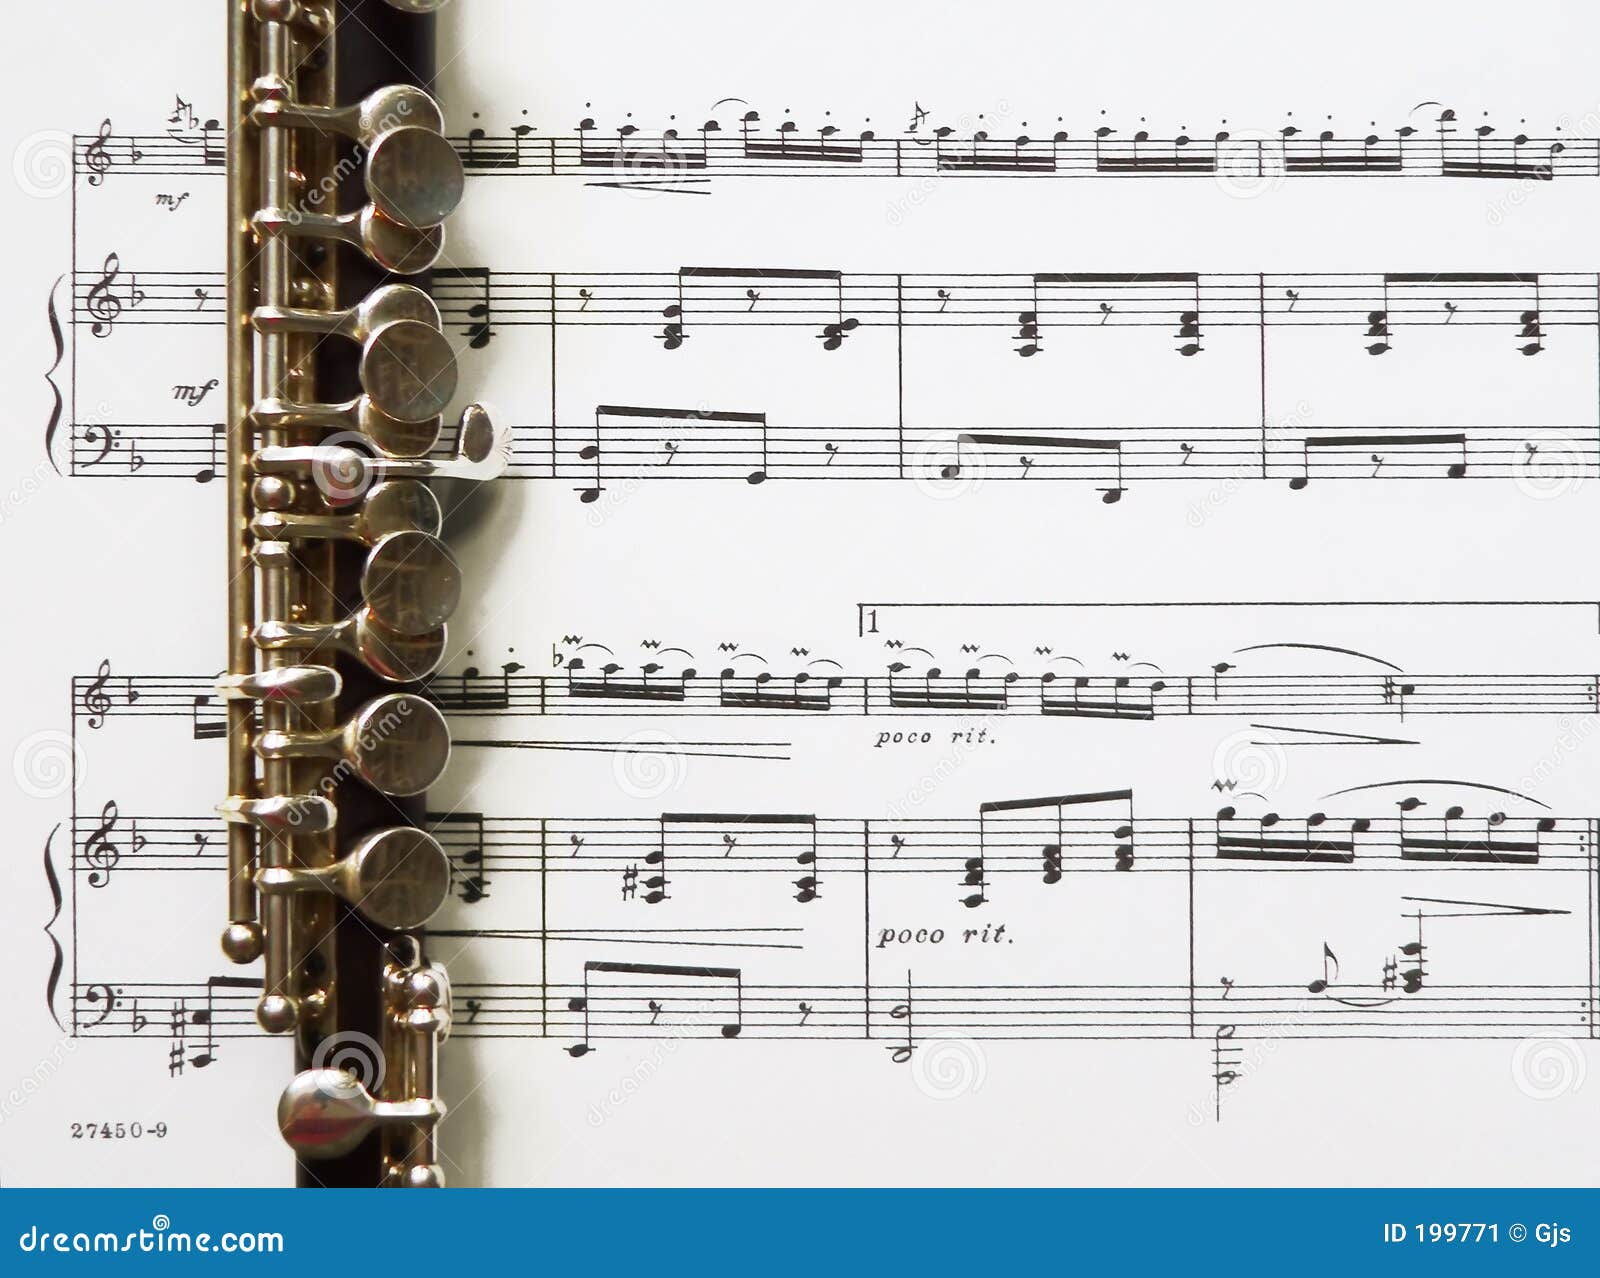 Piccolo and sheet music stock image. Image of accompaniment - 199771